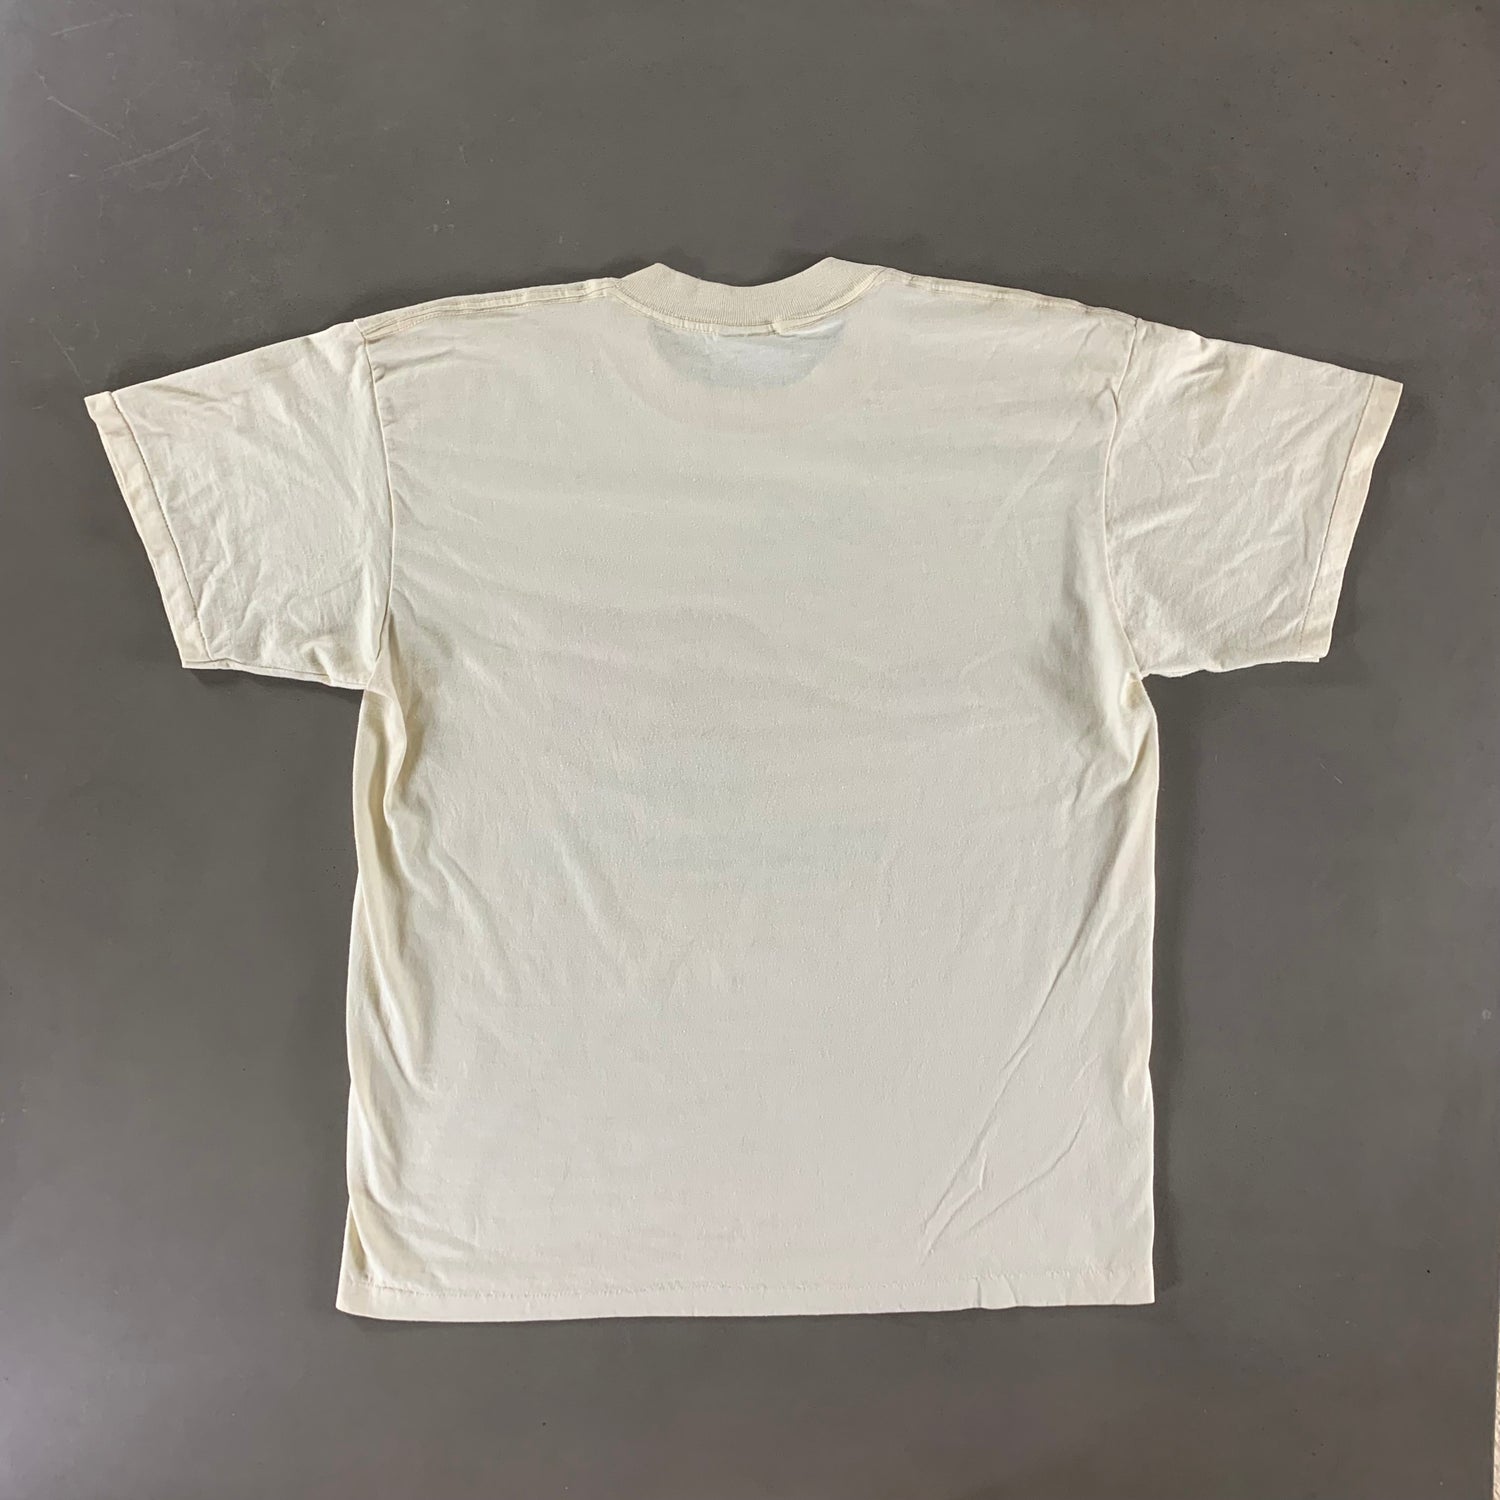 Vintage 1980s Casper Wyoming T-shirt size XL